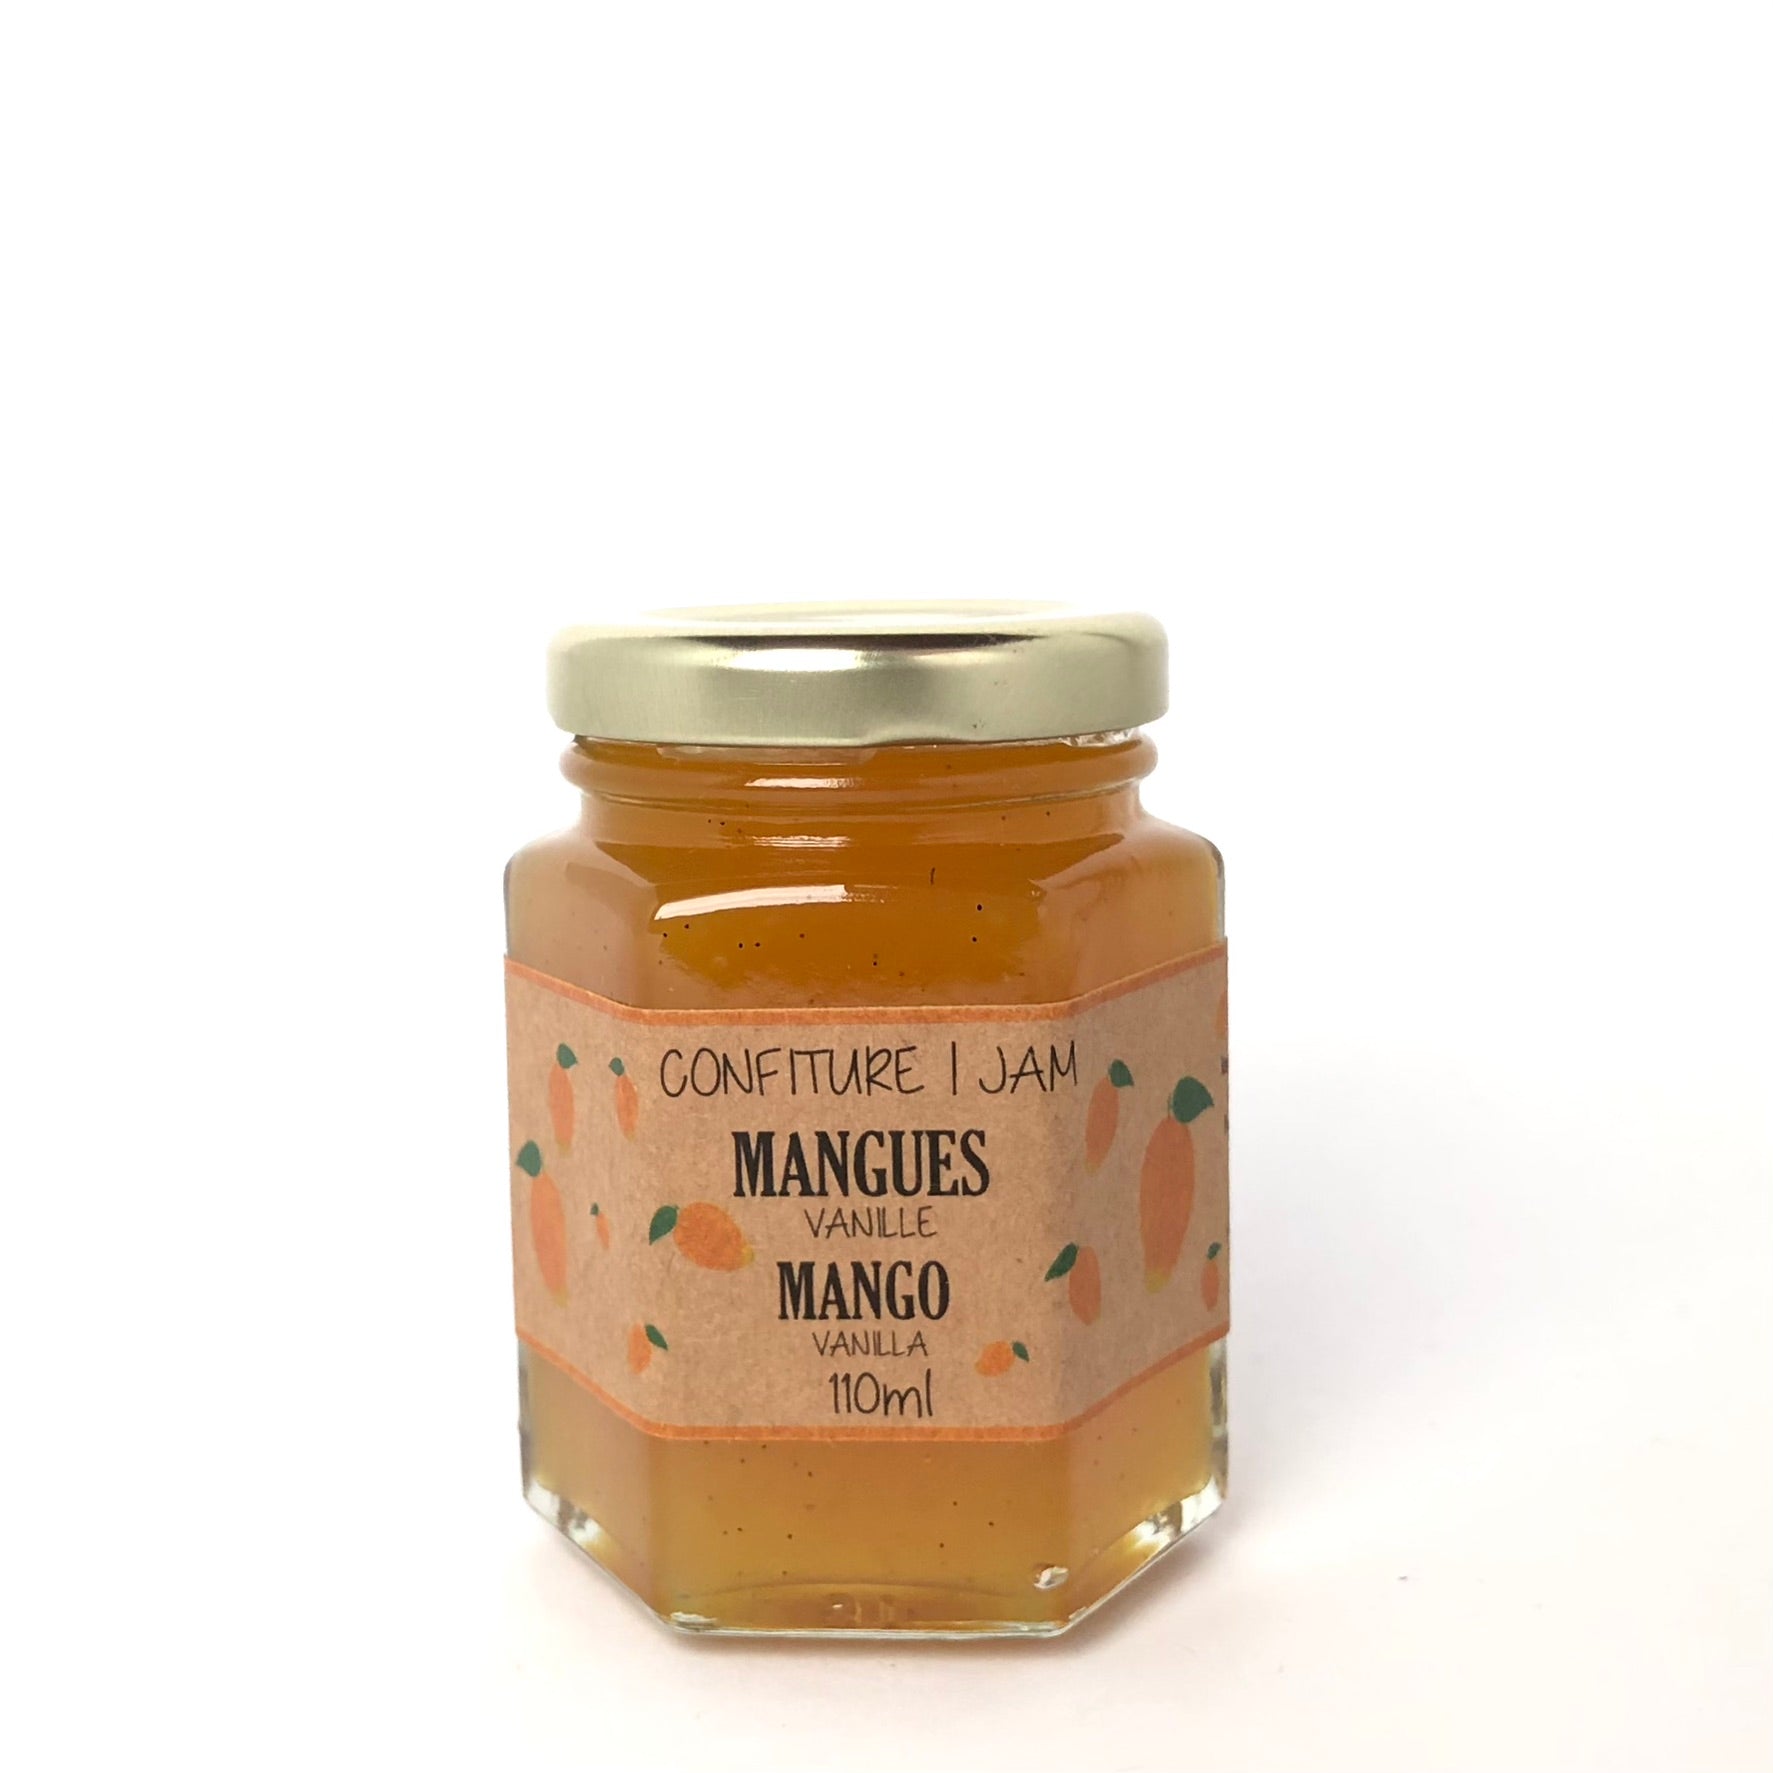 one  110ml jar of Mango vanilla jam